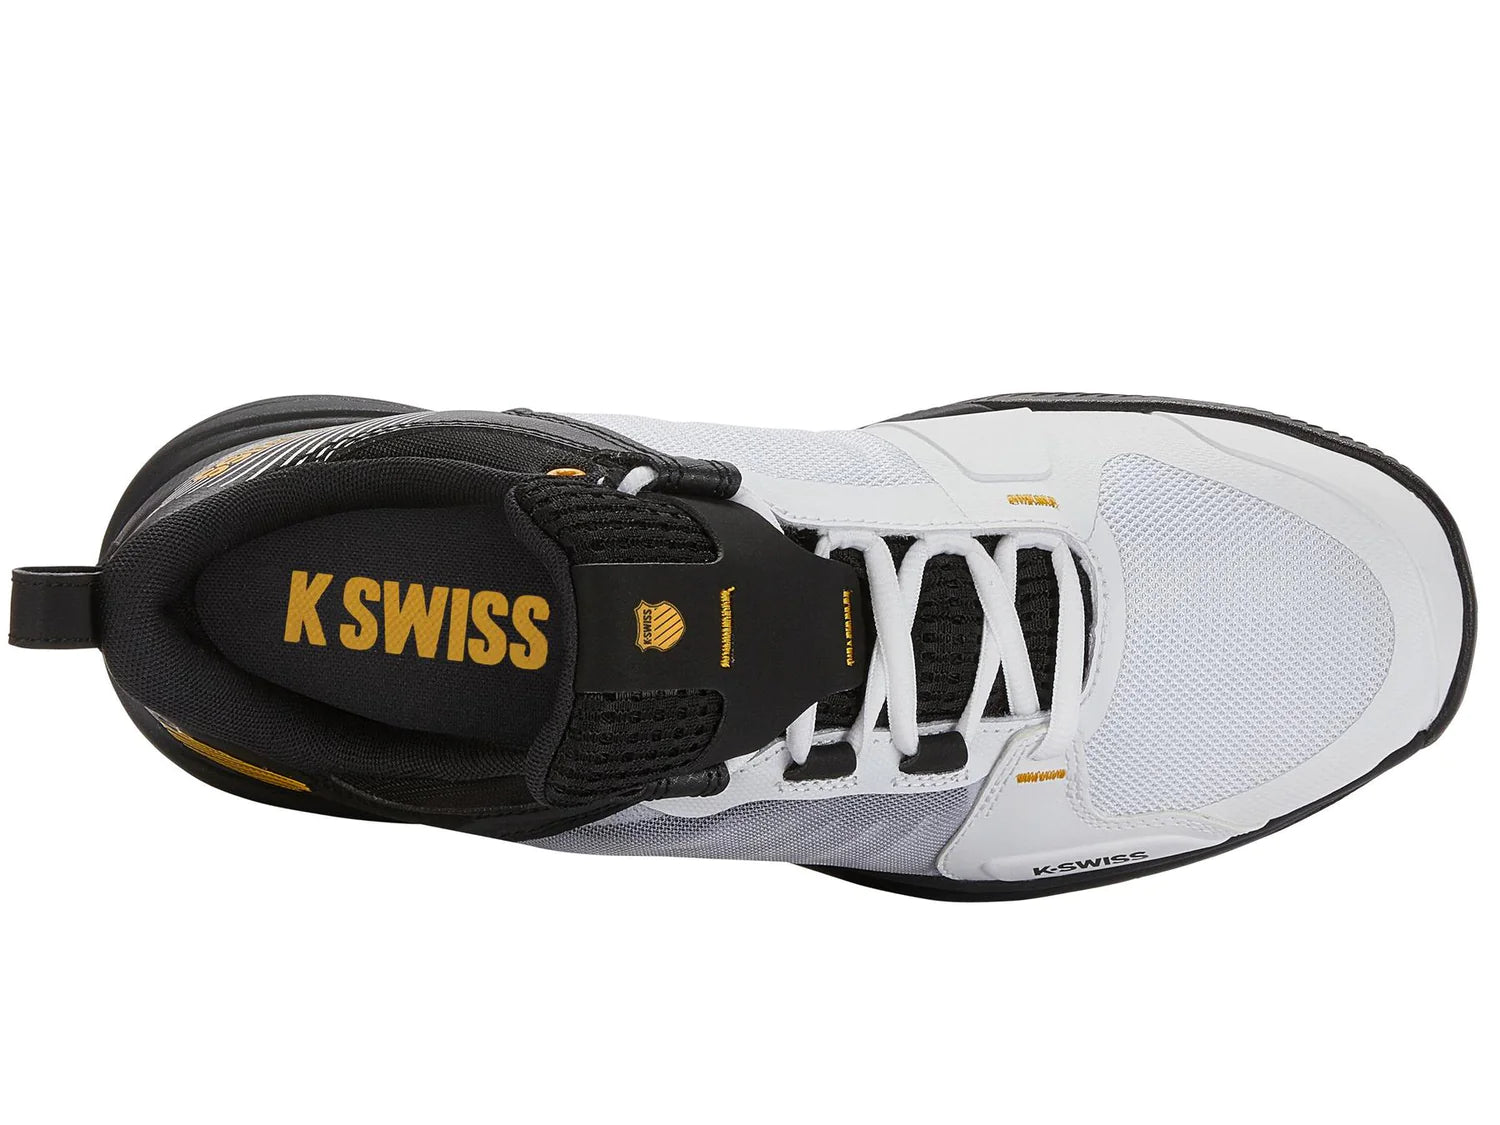 K-Swiss Men's Ultrashot Team Tennis Shoes in White/Moonless Night/Amber Yellow